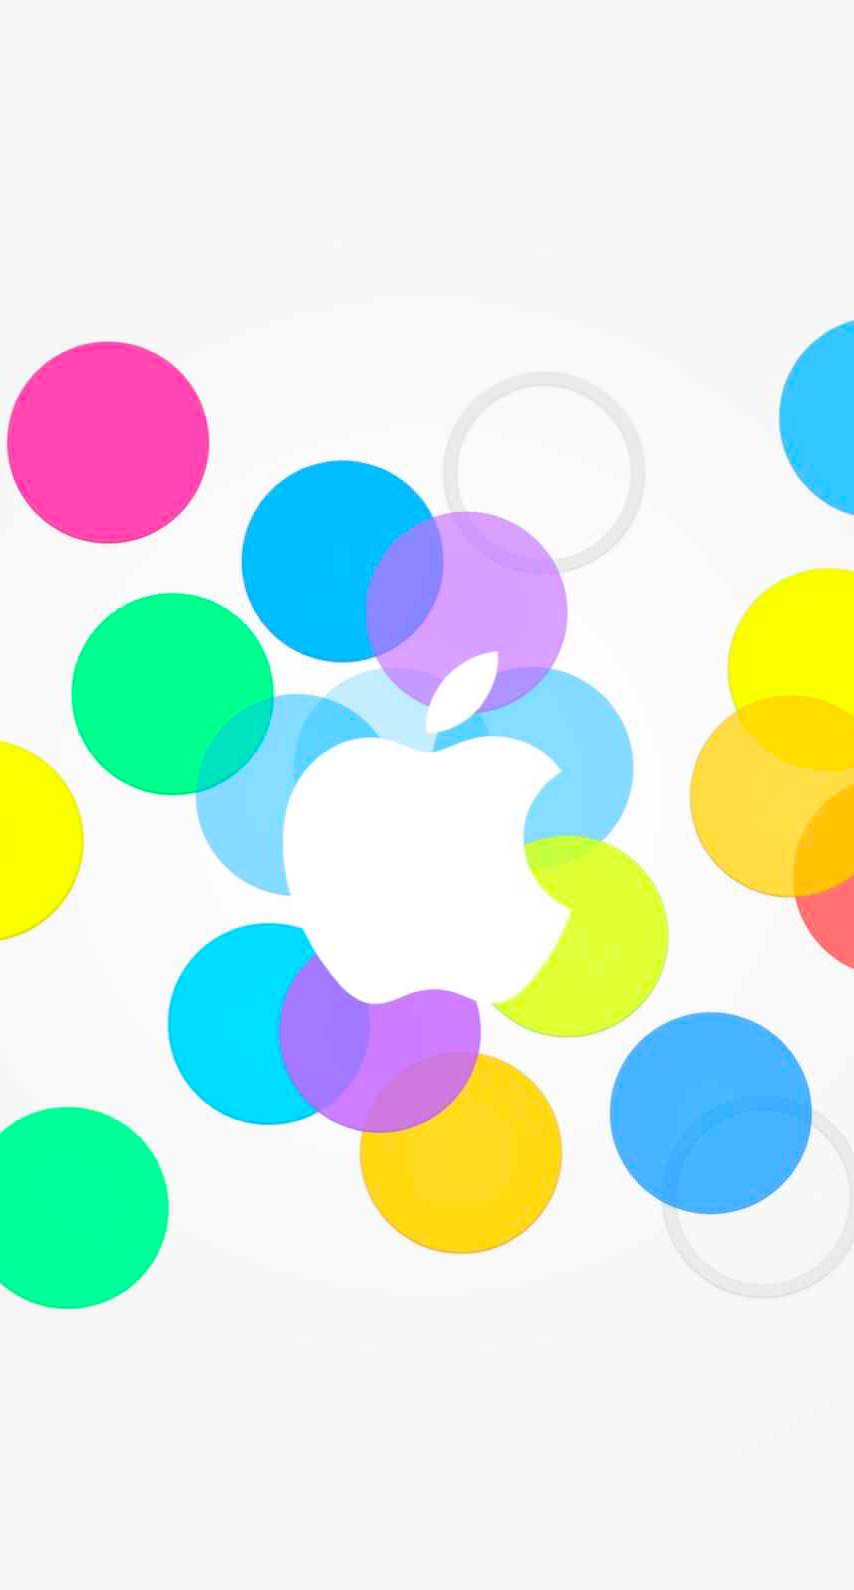 apple logo colorful | wallpaper.sc iPhone6s